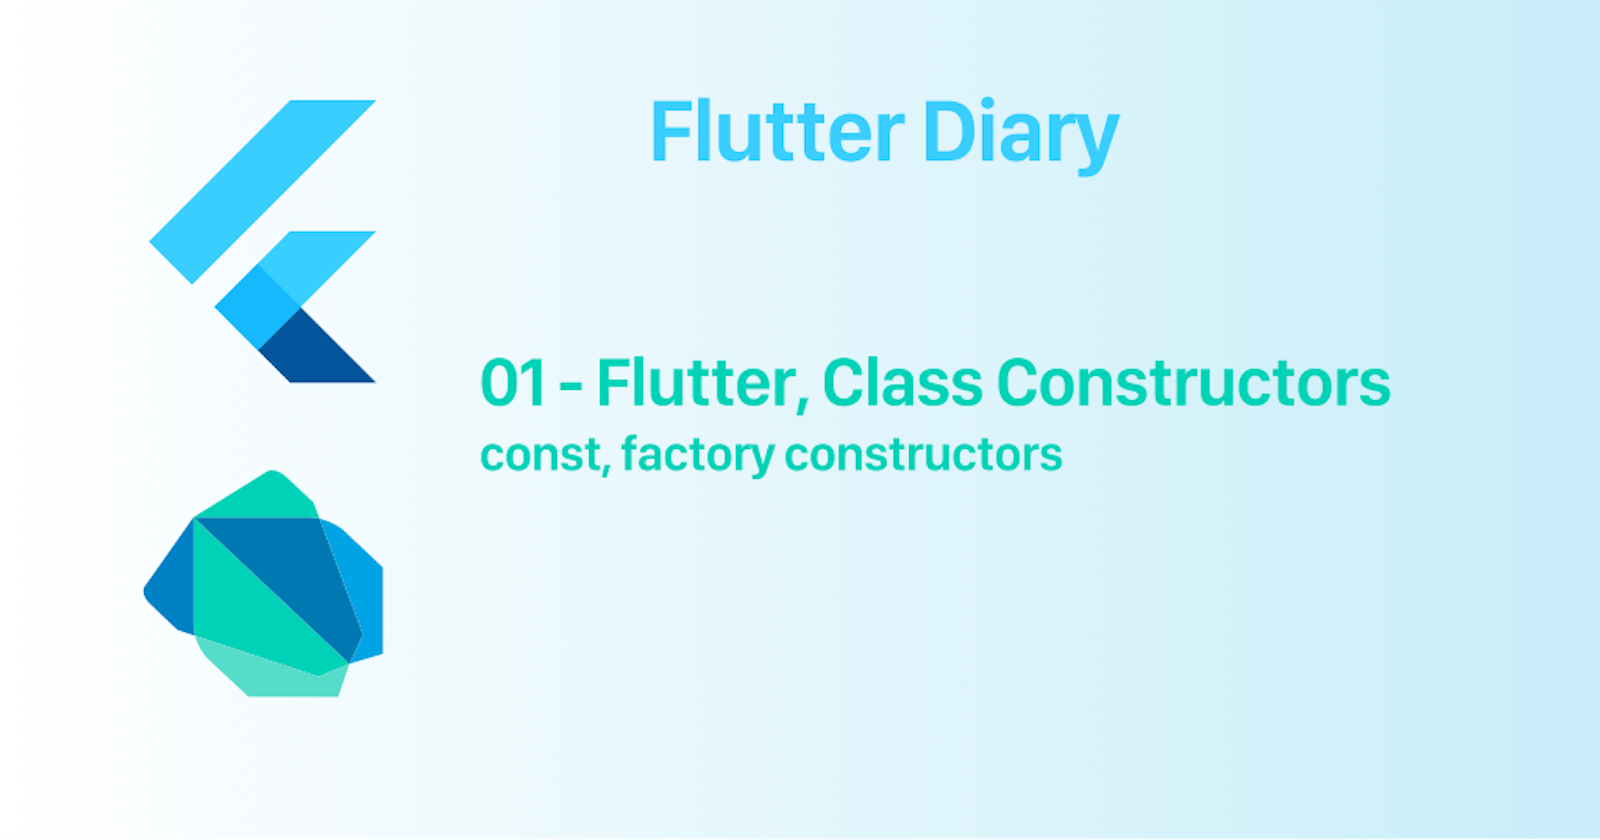 03 - Flutter, Class Constructors